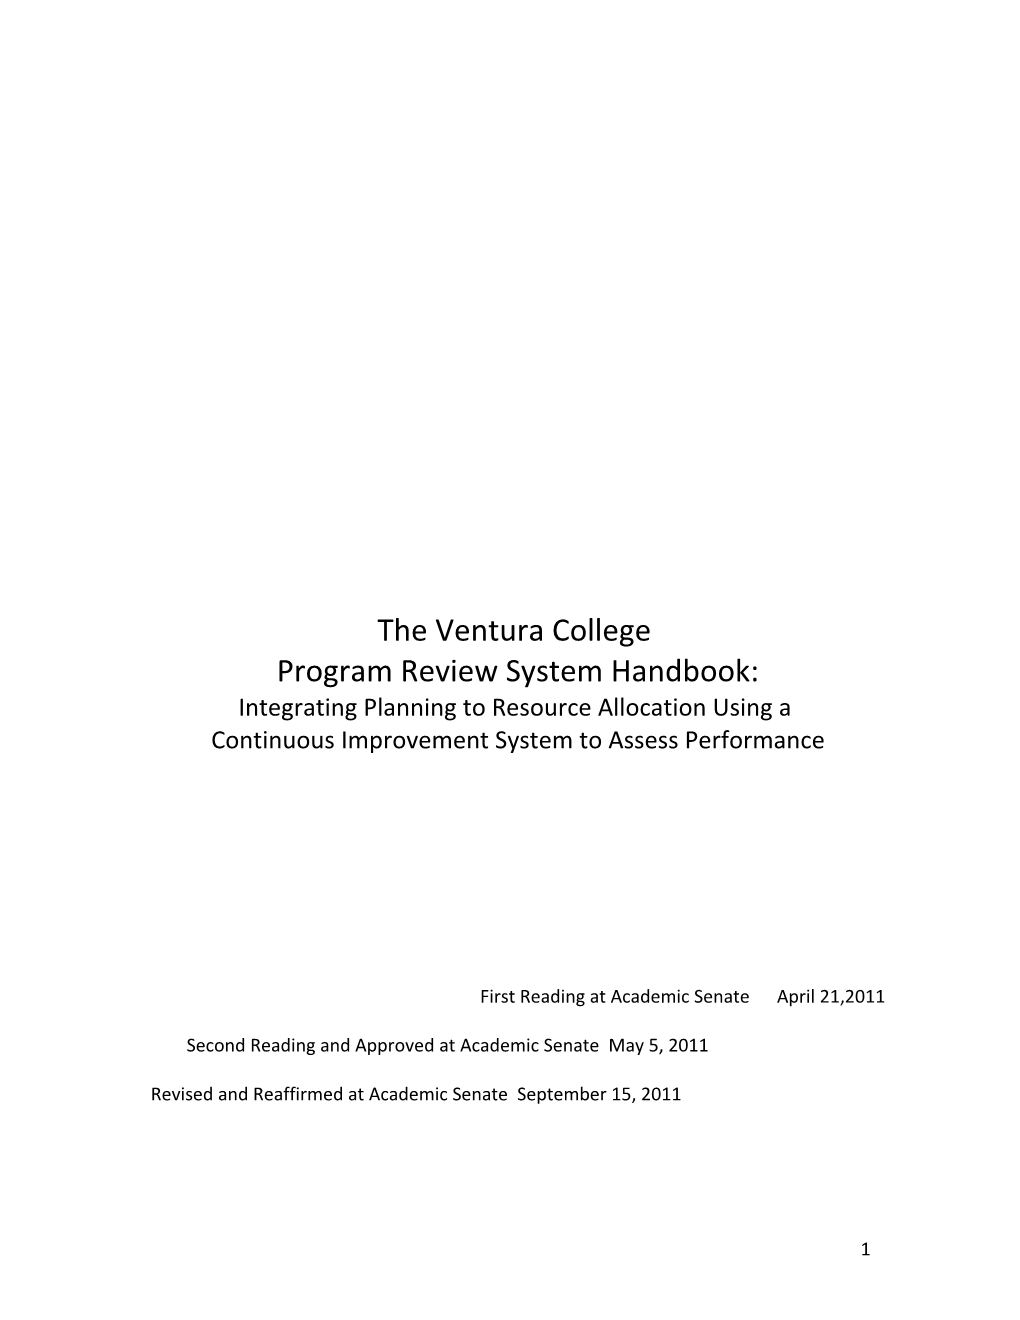 The Ventura College Program Review System Handbook